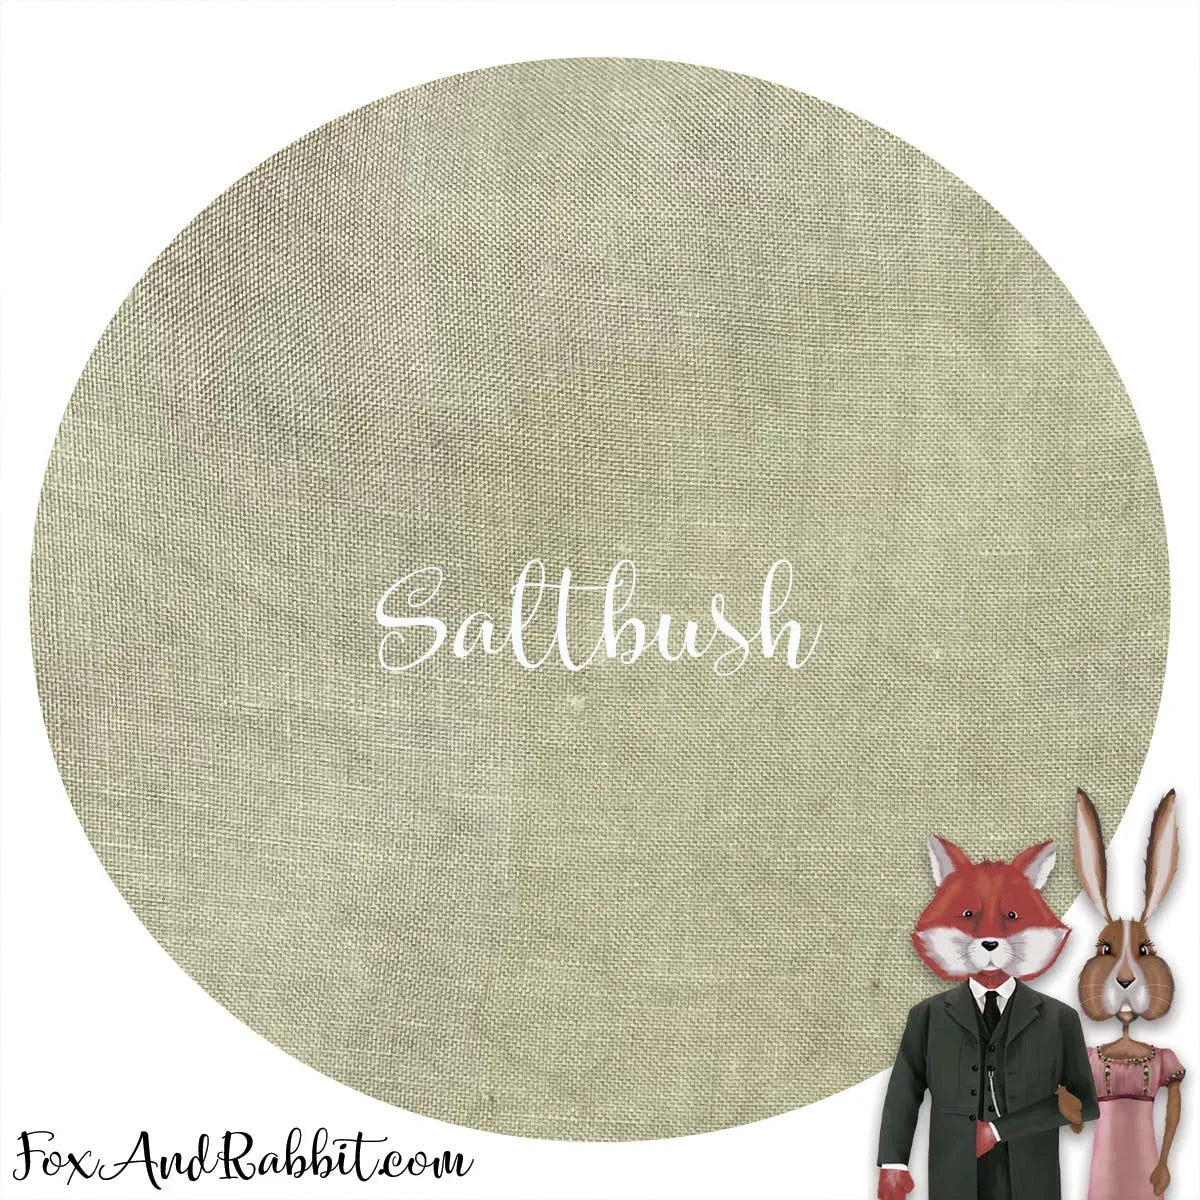 40 Count Saltbush Fox and Rabbit